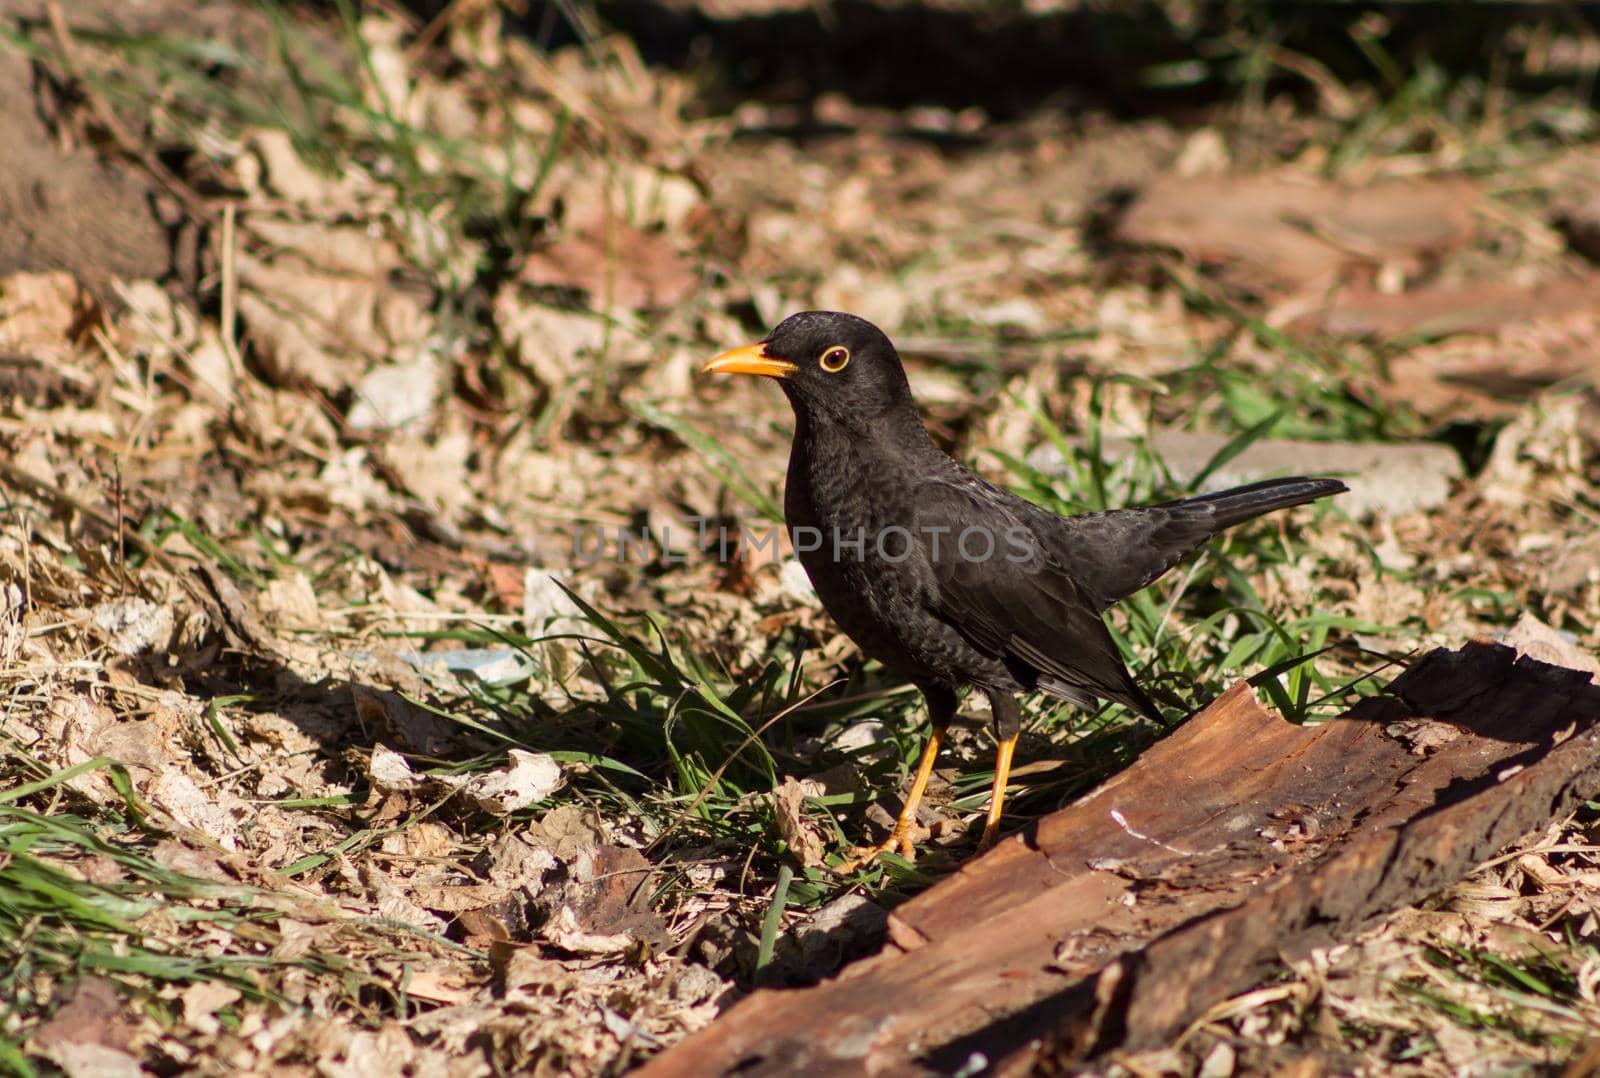 a blackbird walking through the field in South America